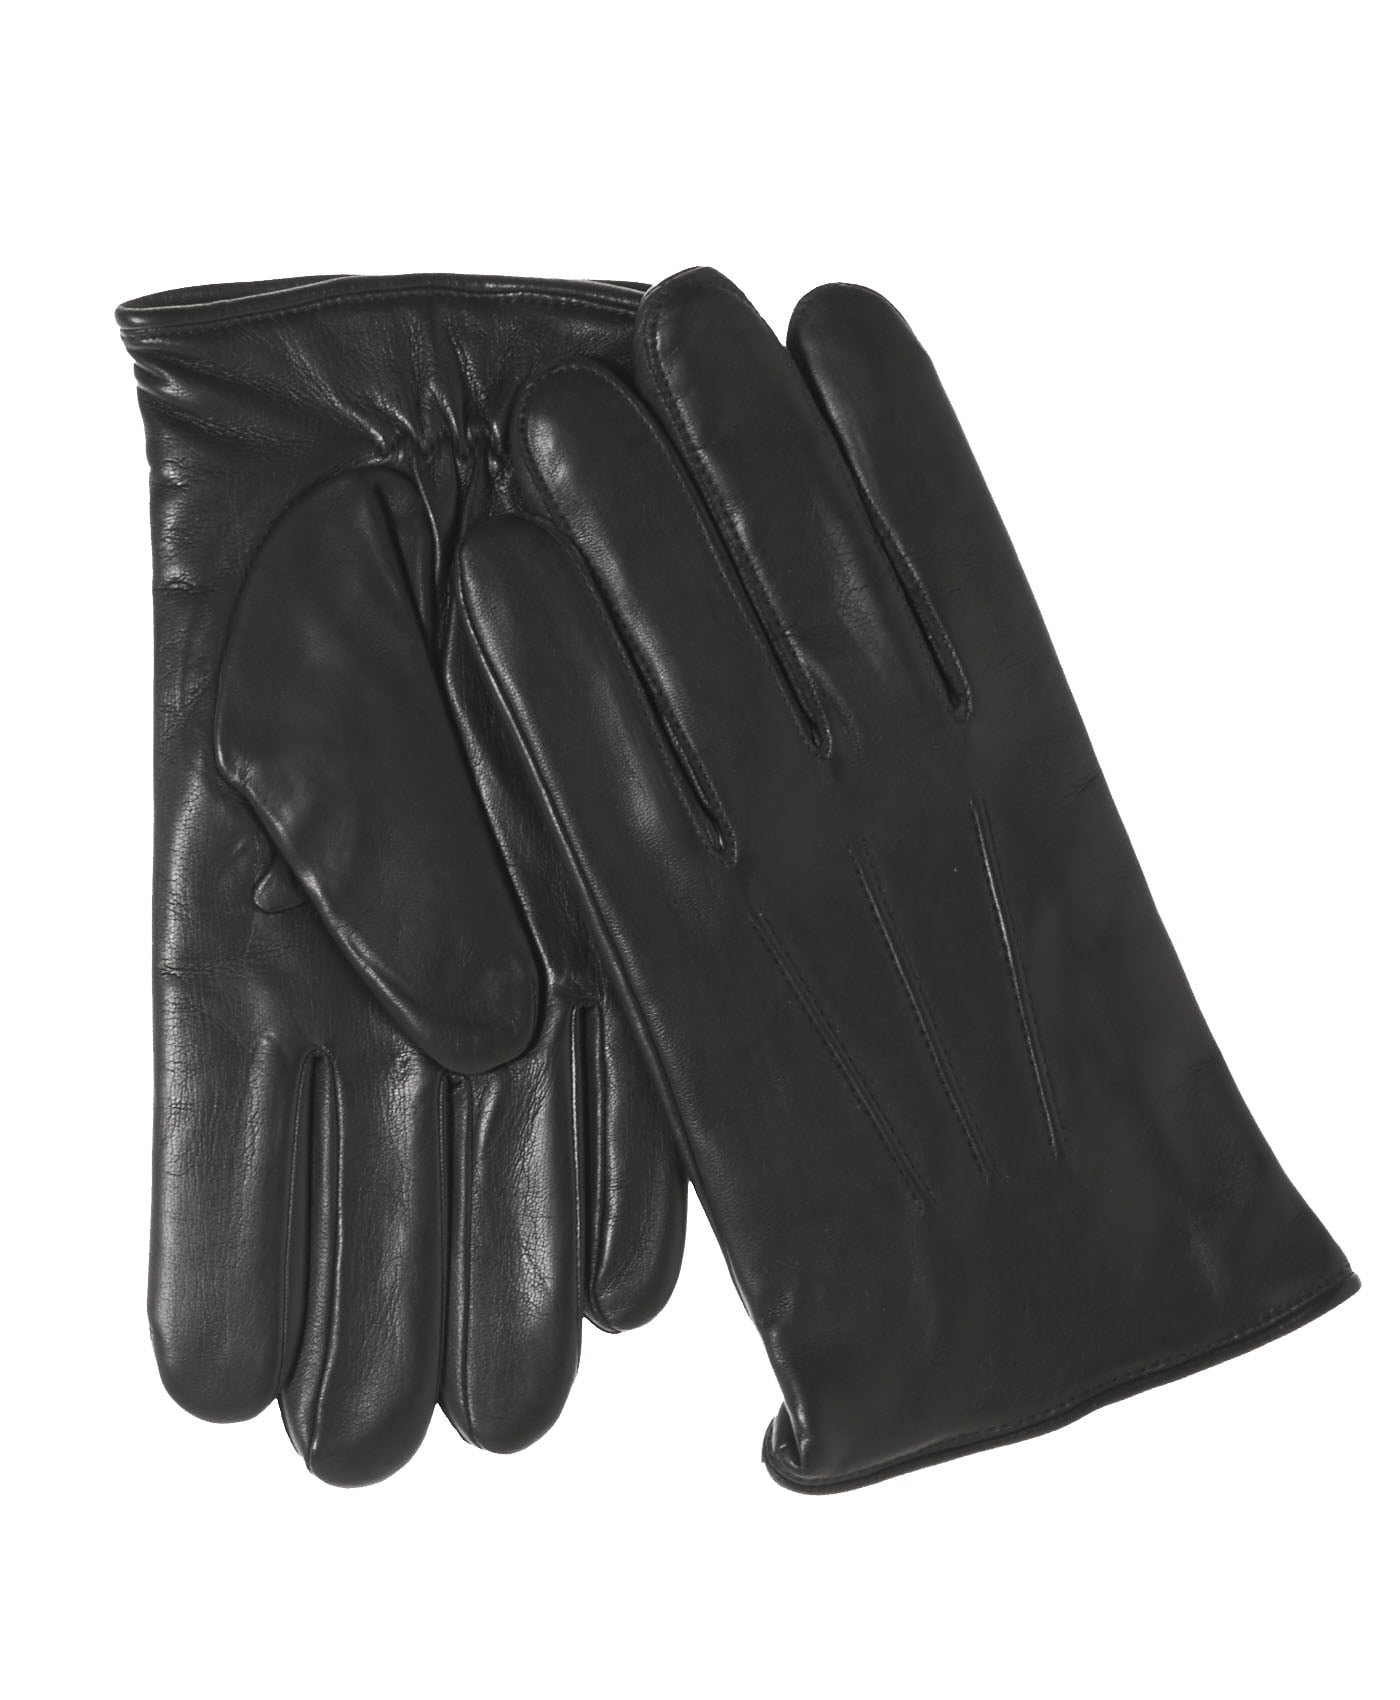 men's fine leather gloves